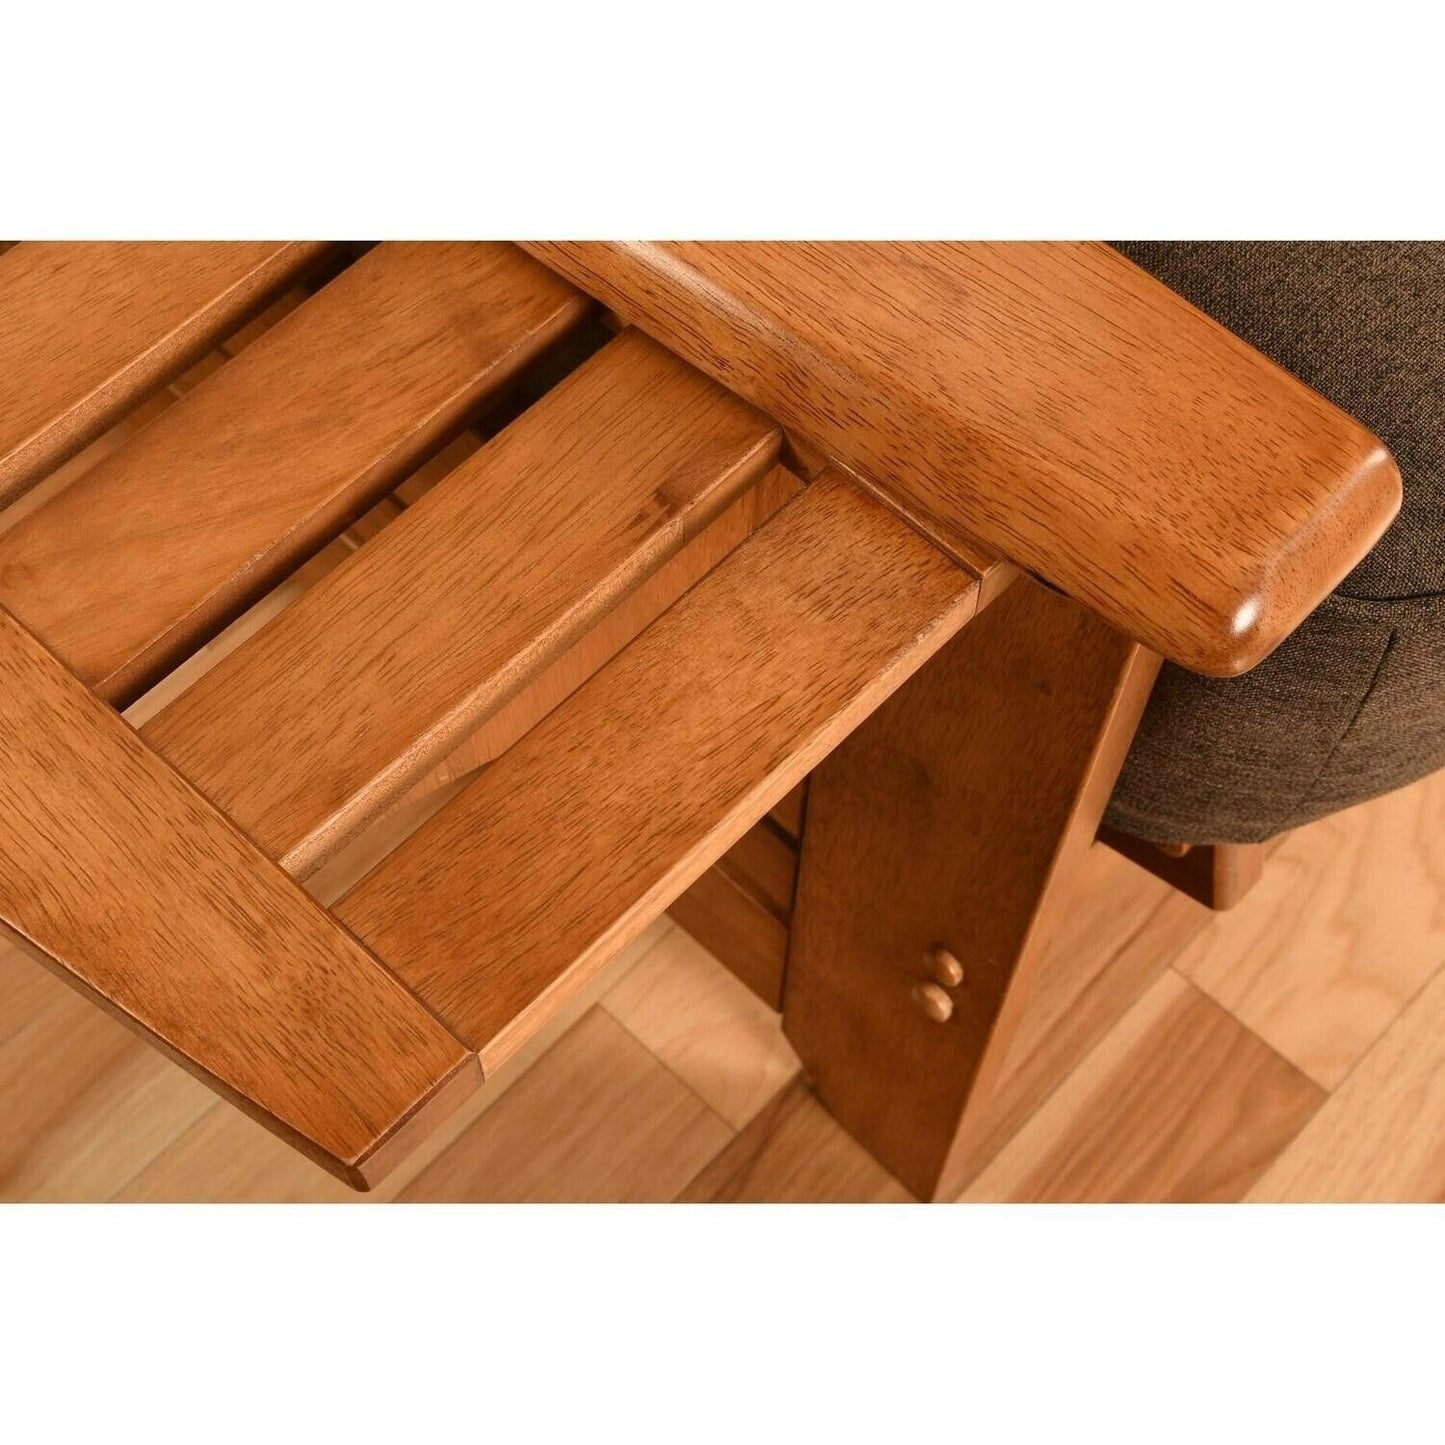 Futon Bed Set - Full Sz Solid Wood Futon w/Cotton Mattress & Storage - Light Brn